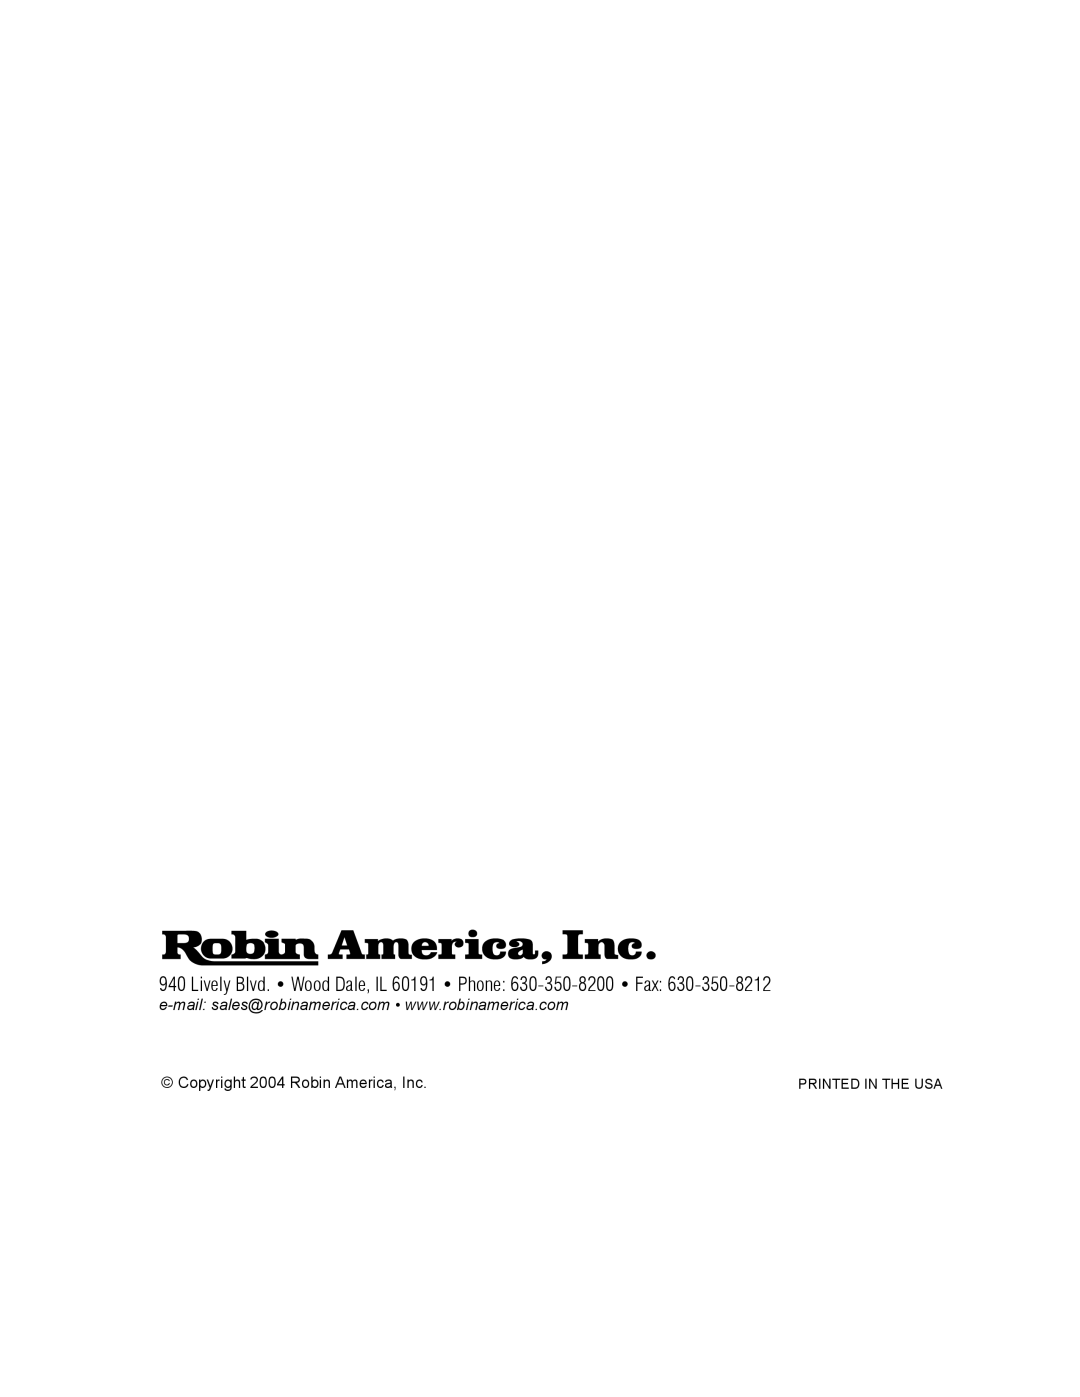 Subaru Robin Power Products R1700i service manual Copyright 2004 Robin America, Inc 